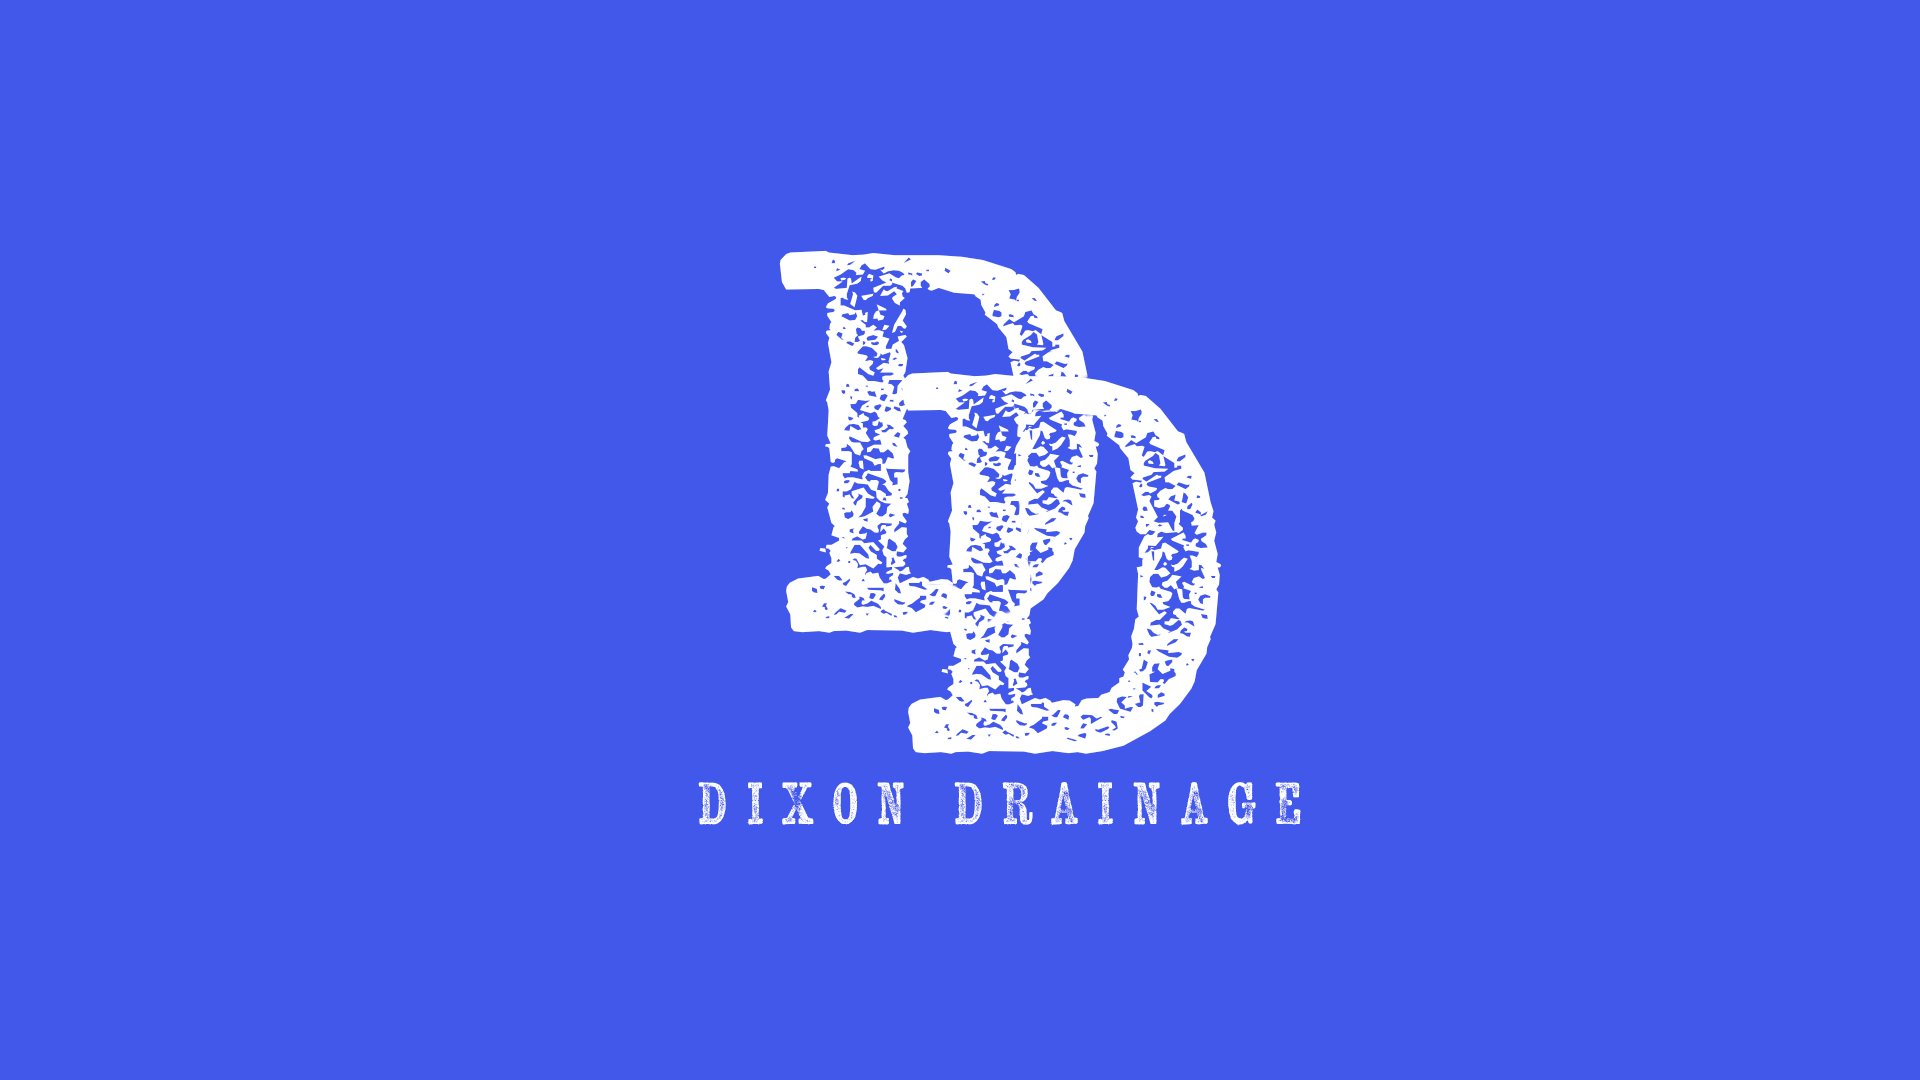 Dixon Drainage Logo